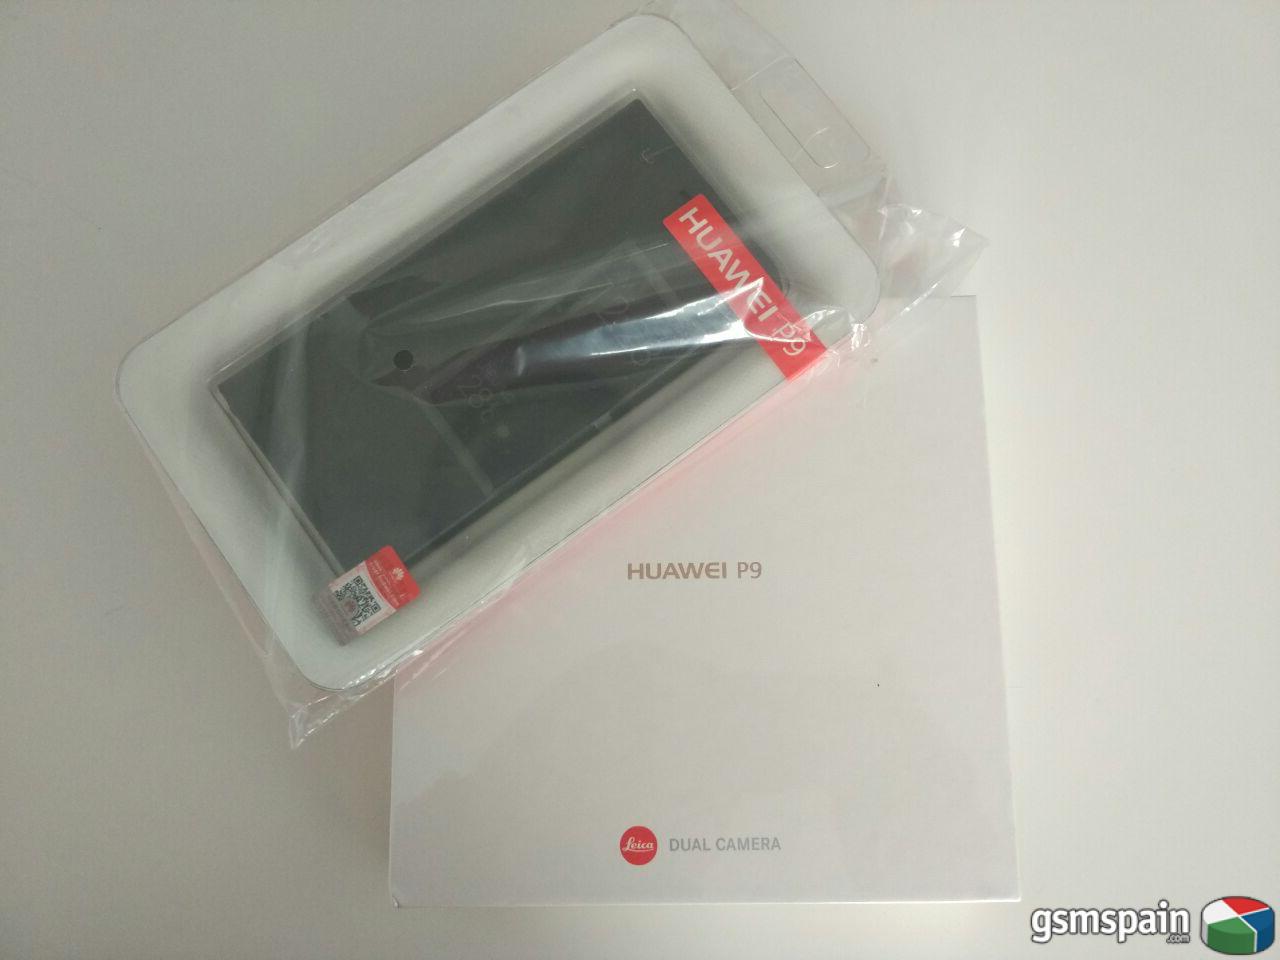 [VENDO] Huawei P9 32GB Titanium Grey. Nuevo + Garantia + Regalo funda